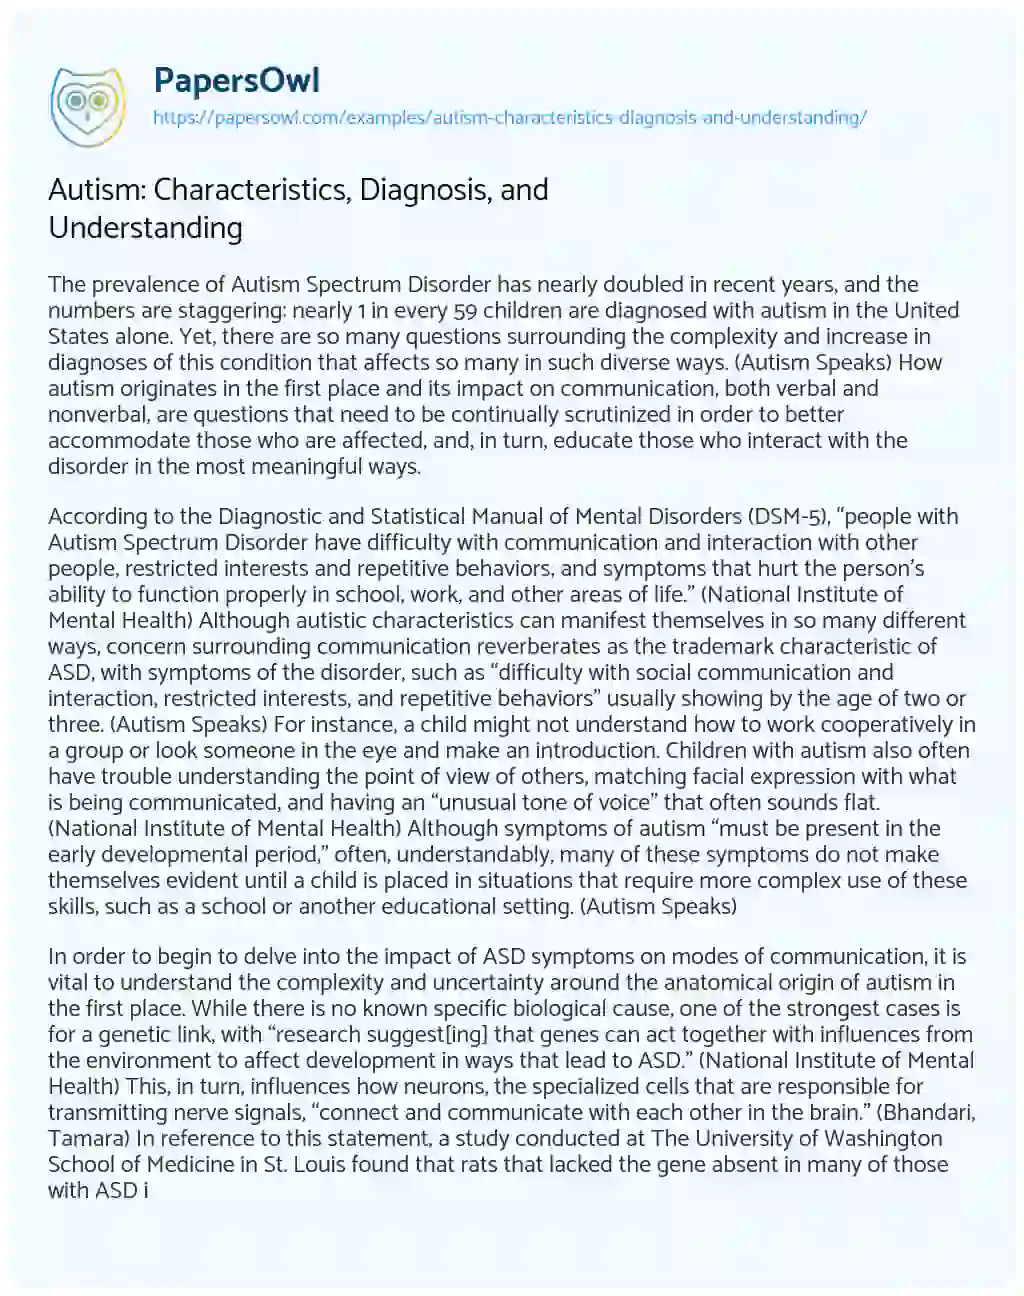 Autism: Characteristics, Diagnosis, and Understanding essay